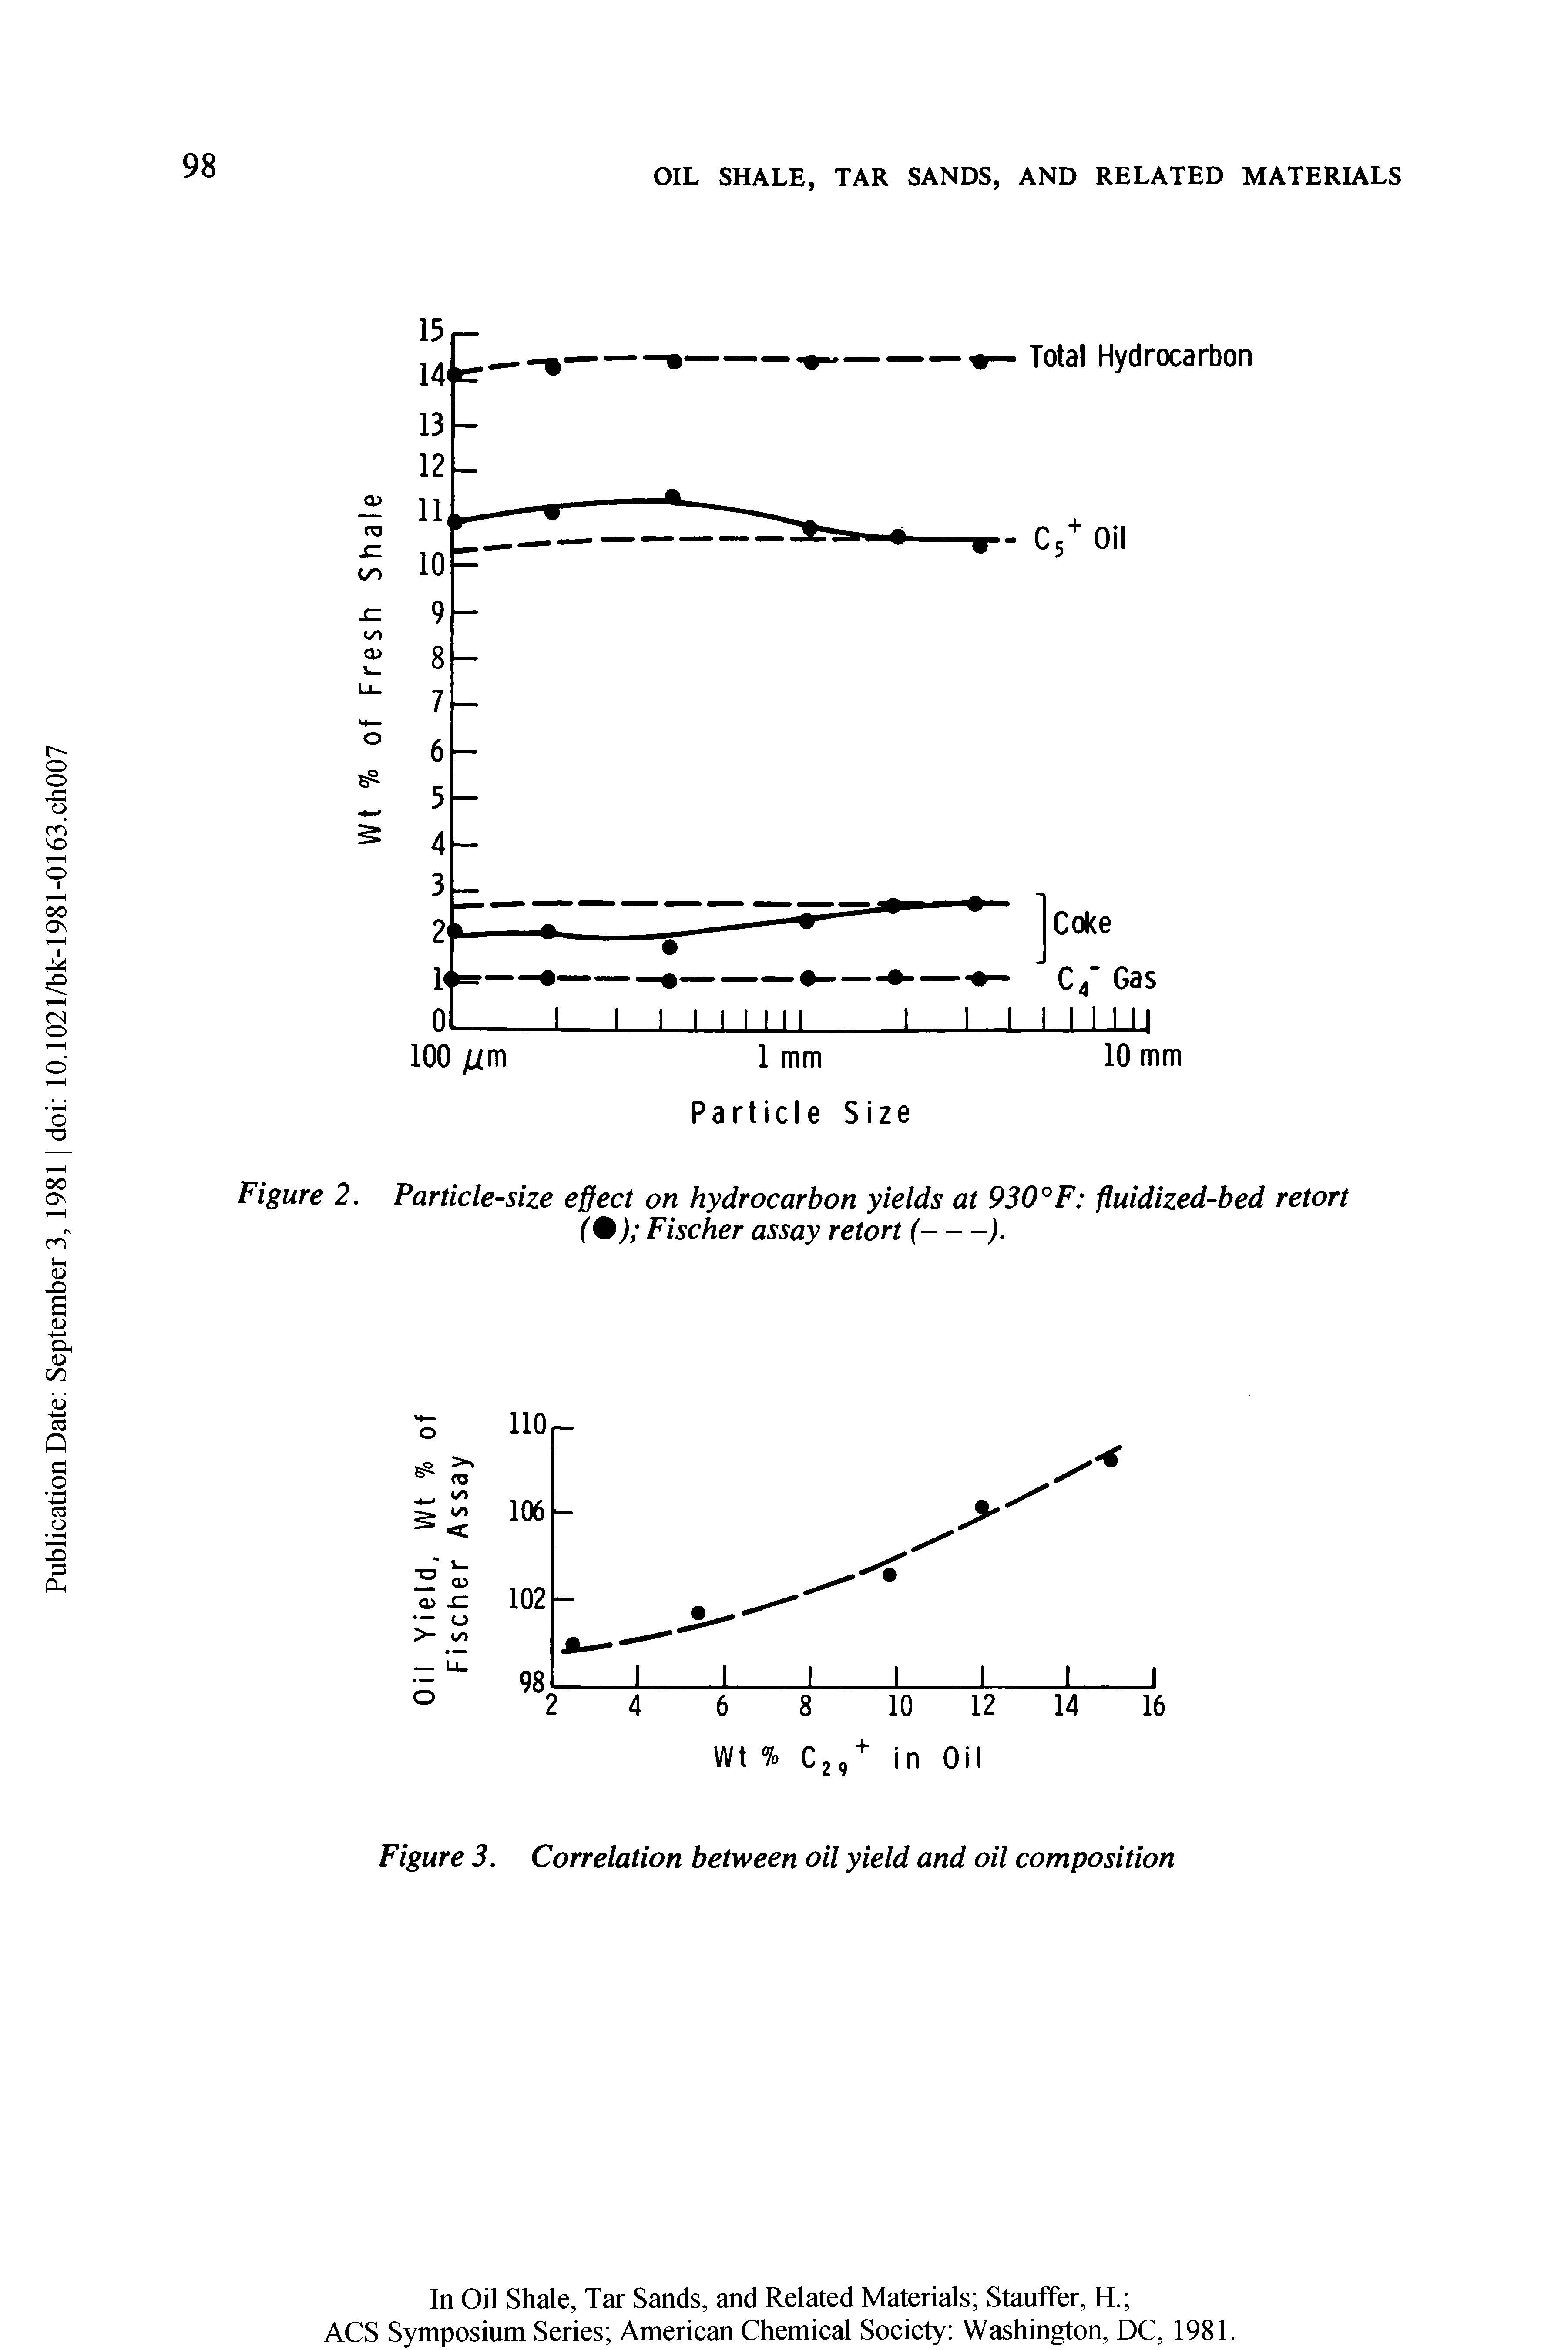 Figure 2. Particle-size effect on hydrocarbon yields at 930° F fluidized-bed retort (%) Fischer assay retort (----------------------------------).